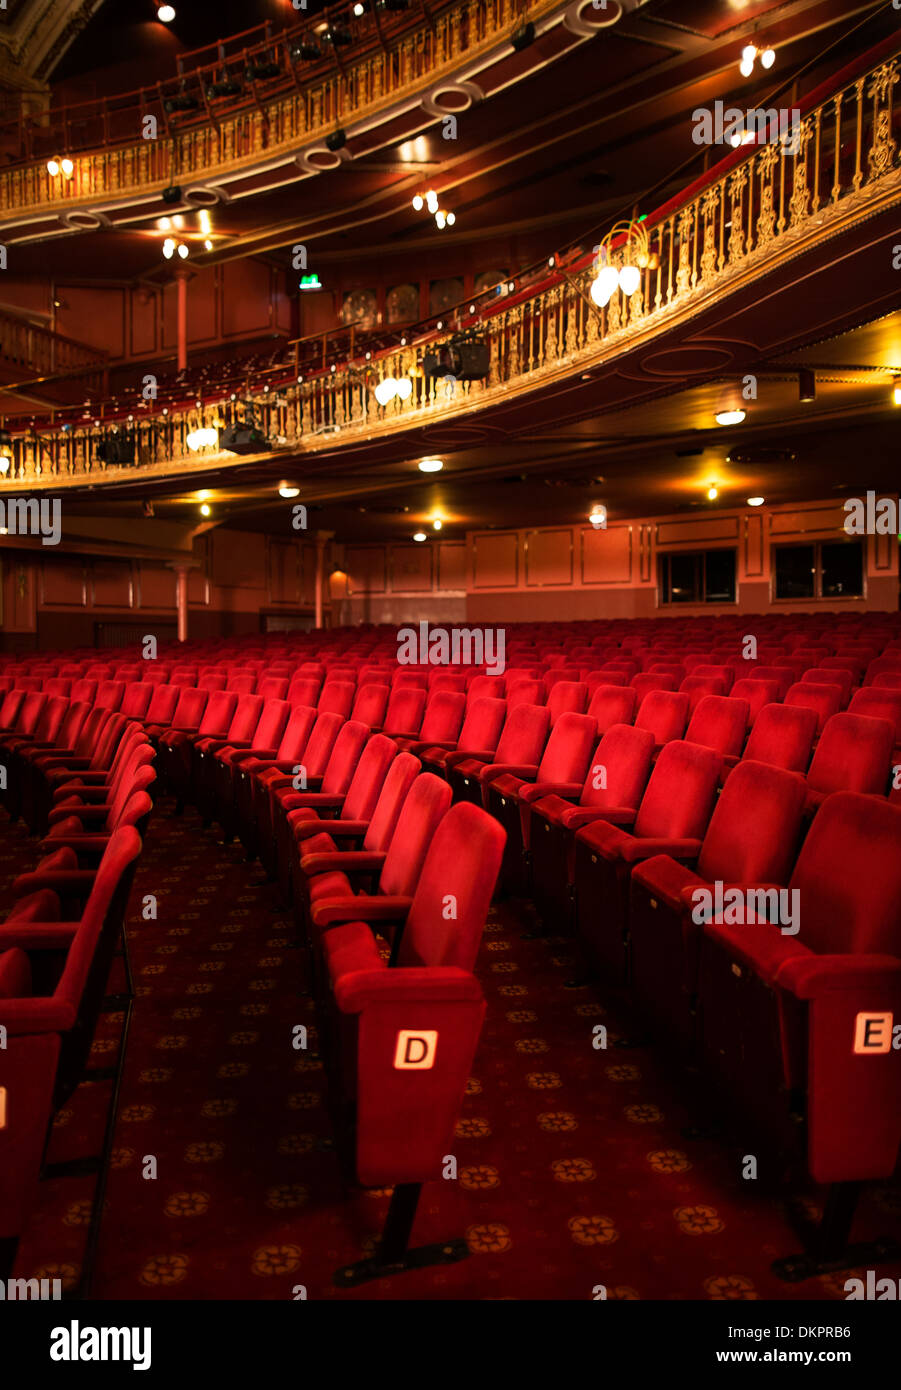 Seats in empty theater auditorium Stock Photo